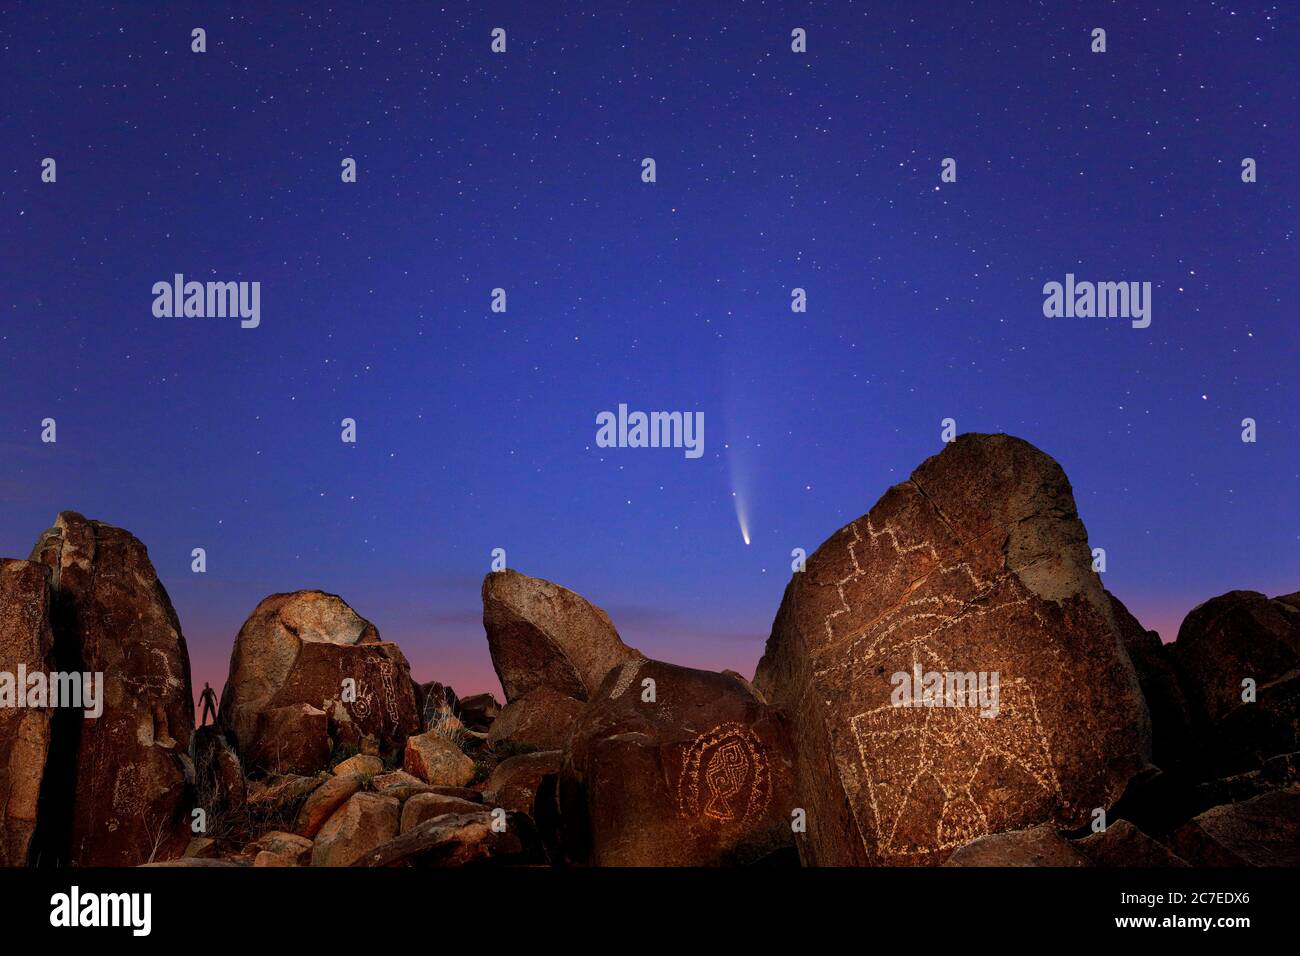 Comet Neowise & Petroglyphs (Composite) Stock Photo